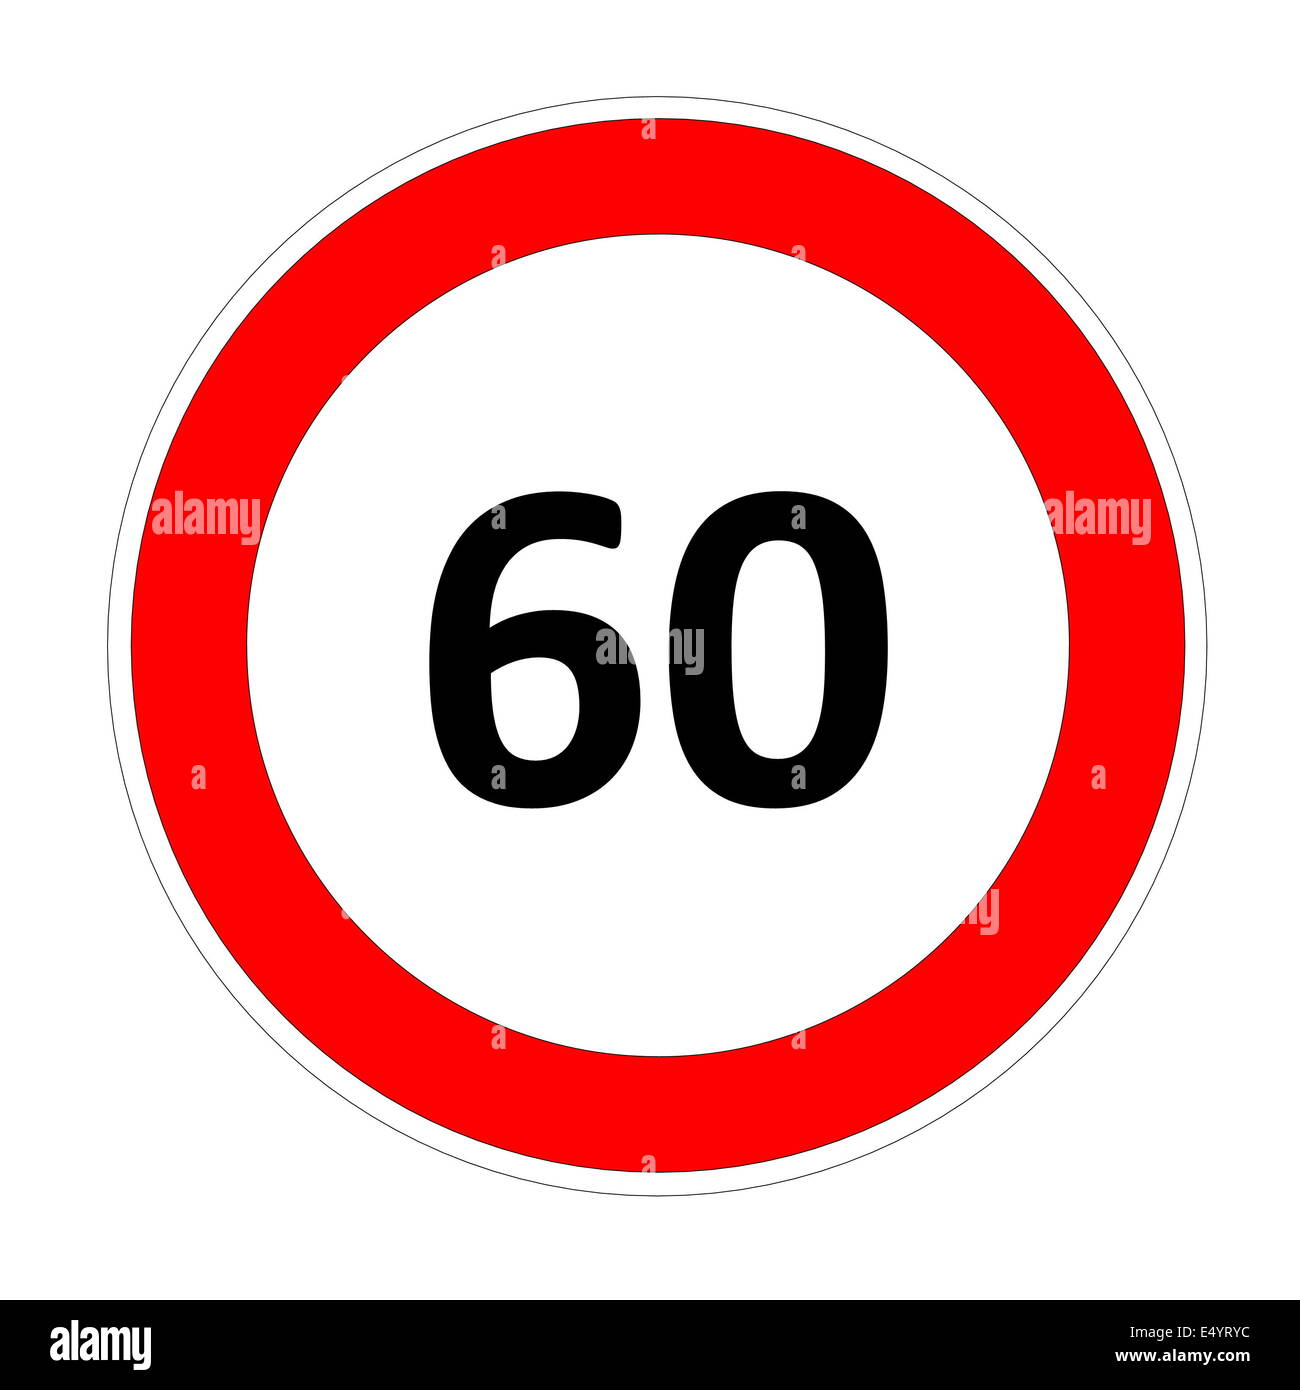 60 speed limit sign Stock Photo